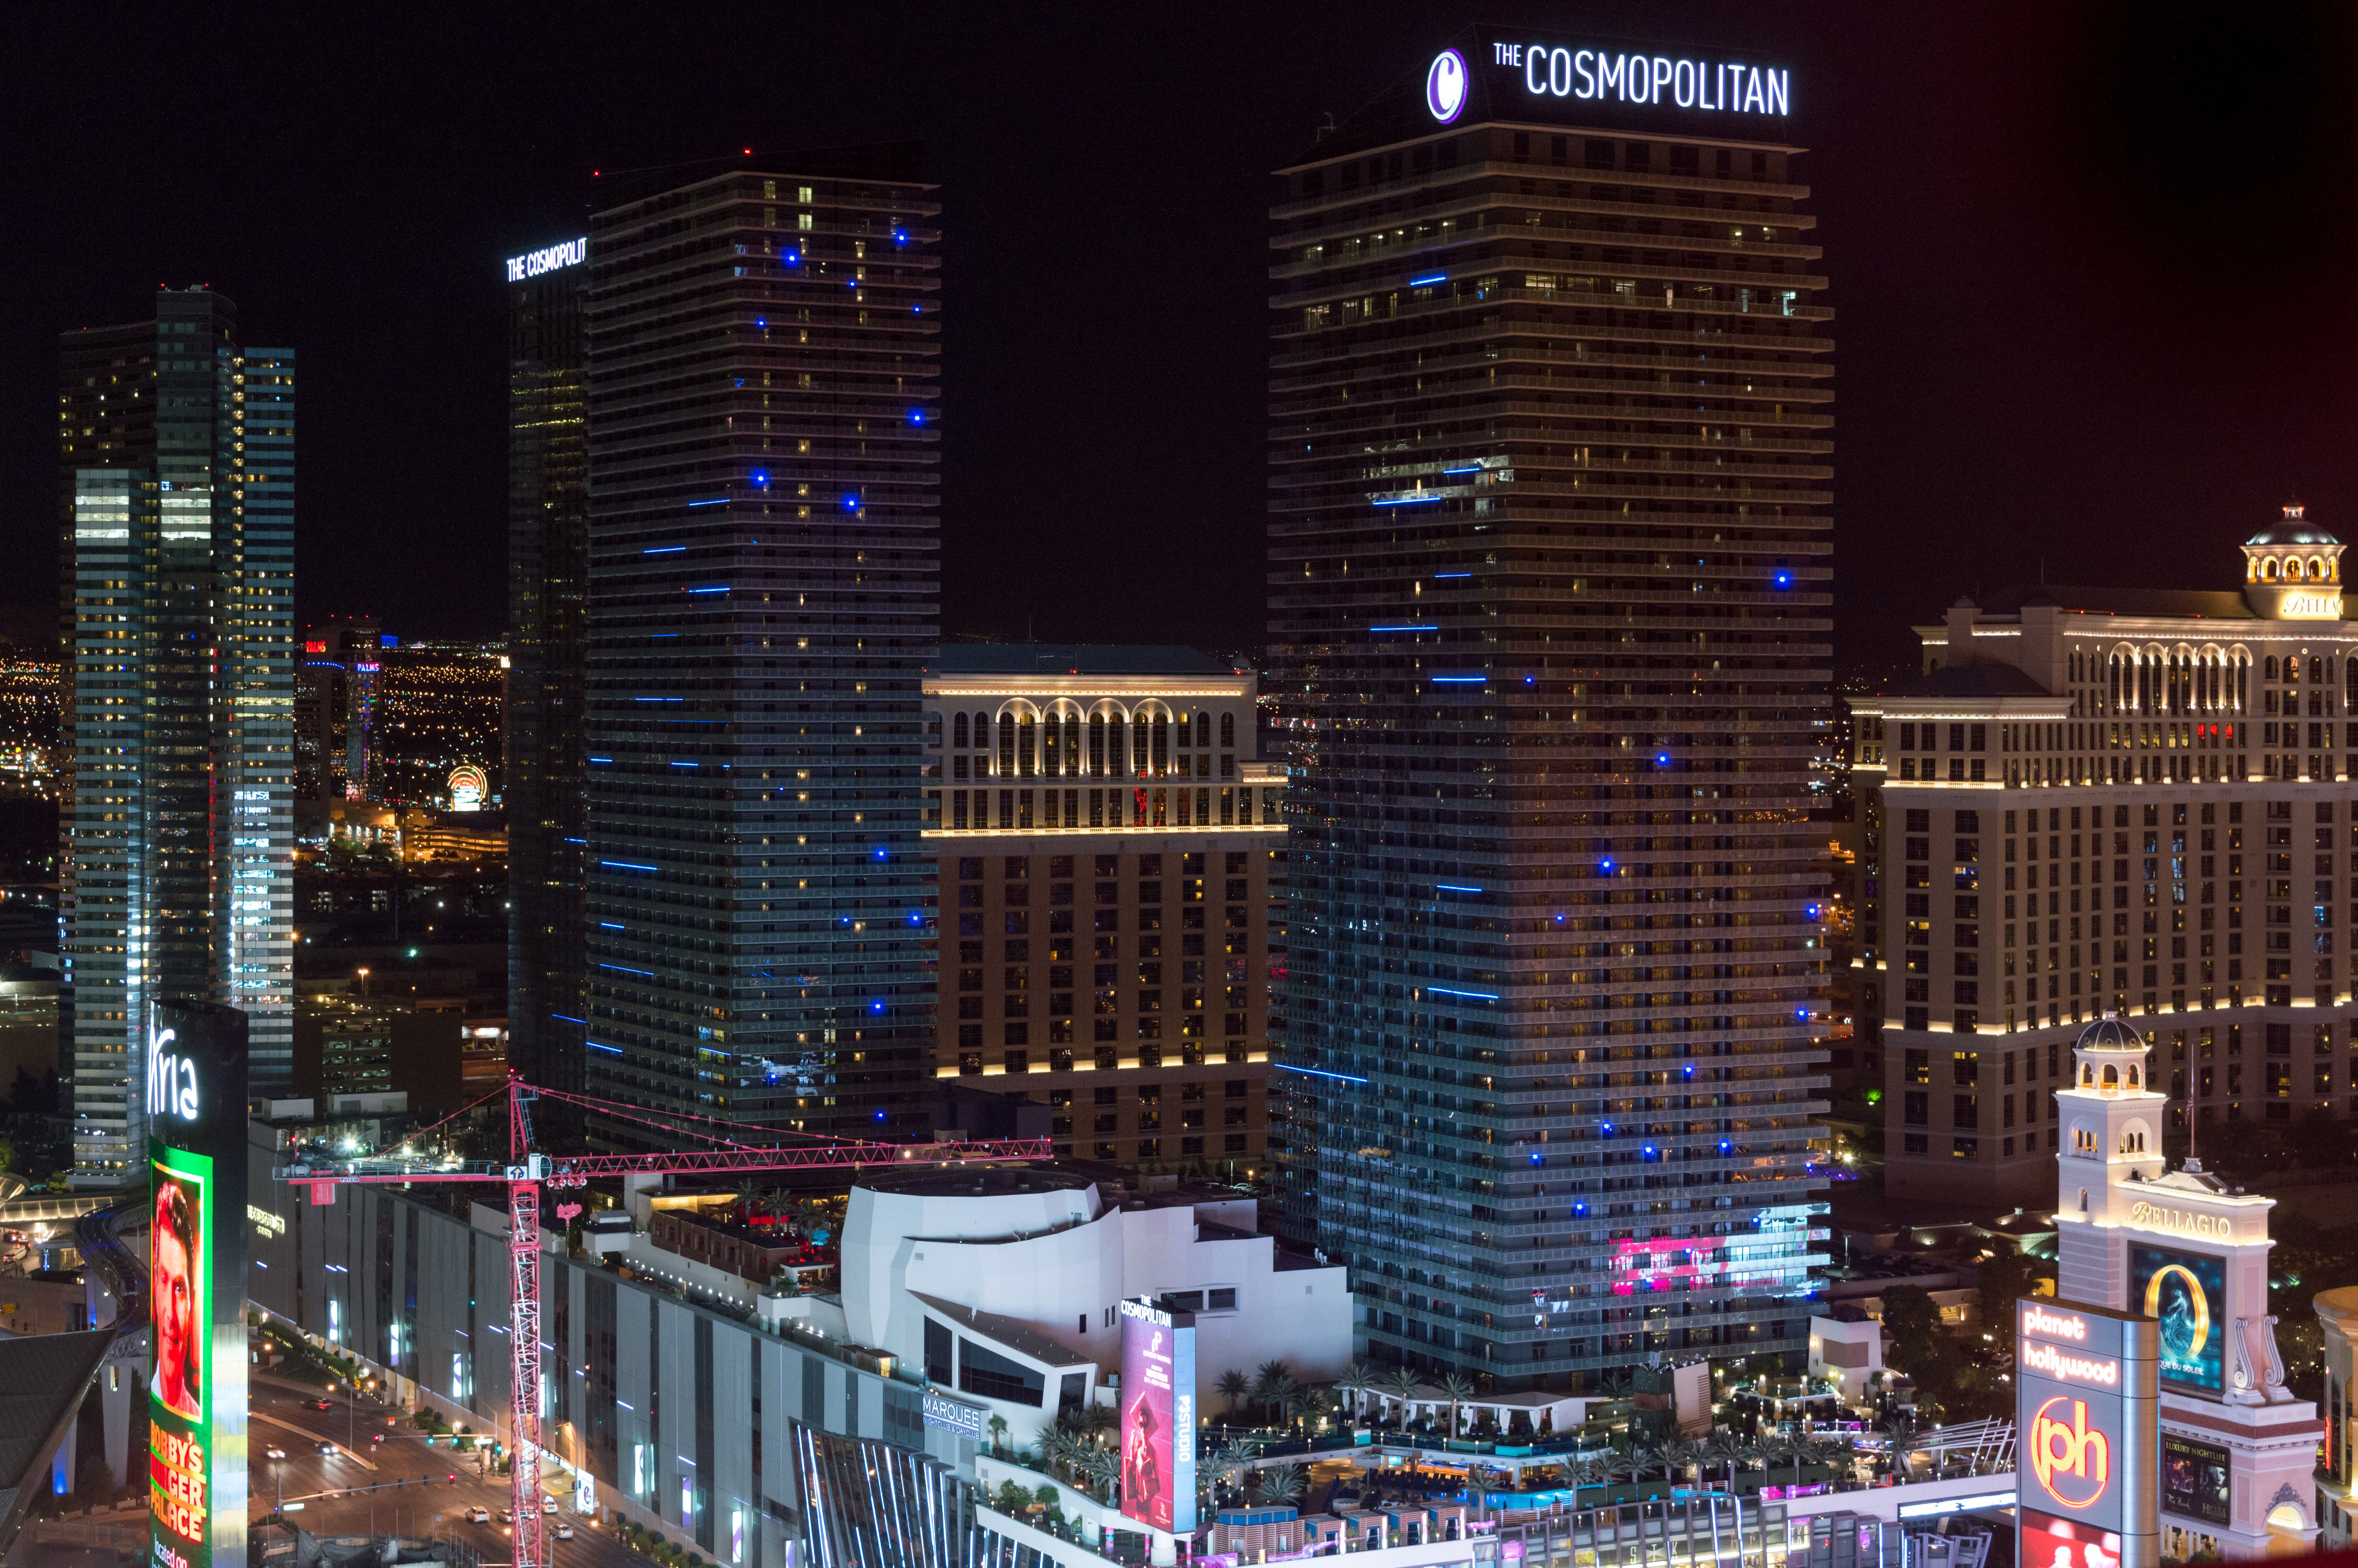 The Cosmopolitan, Las Vegas